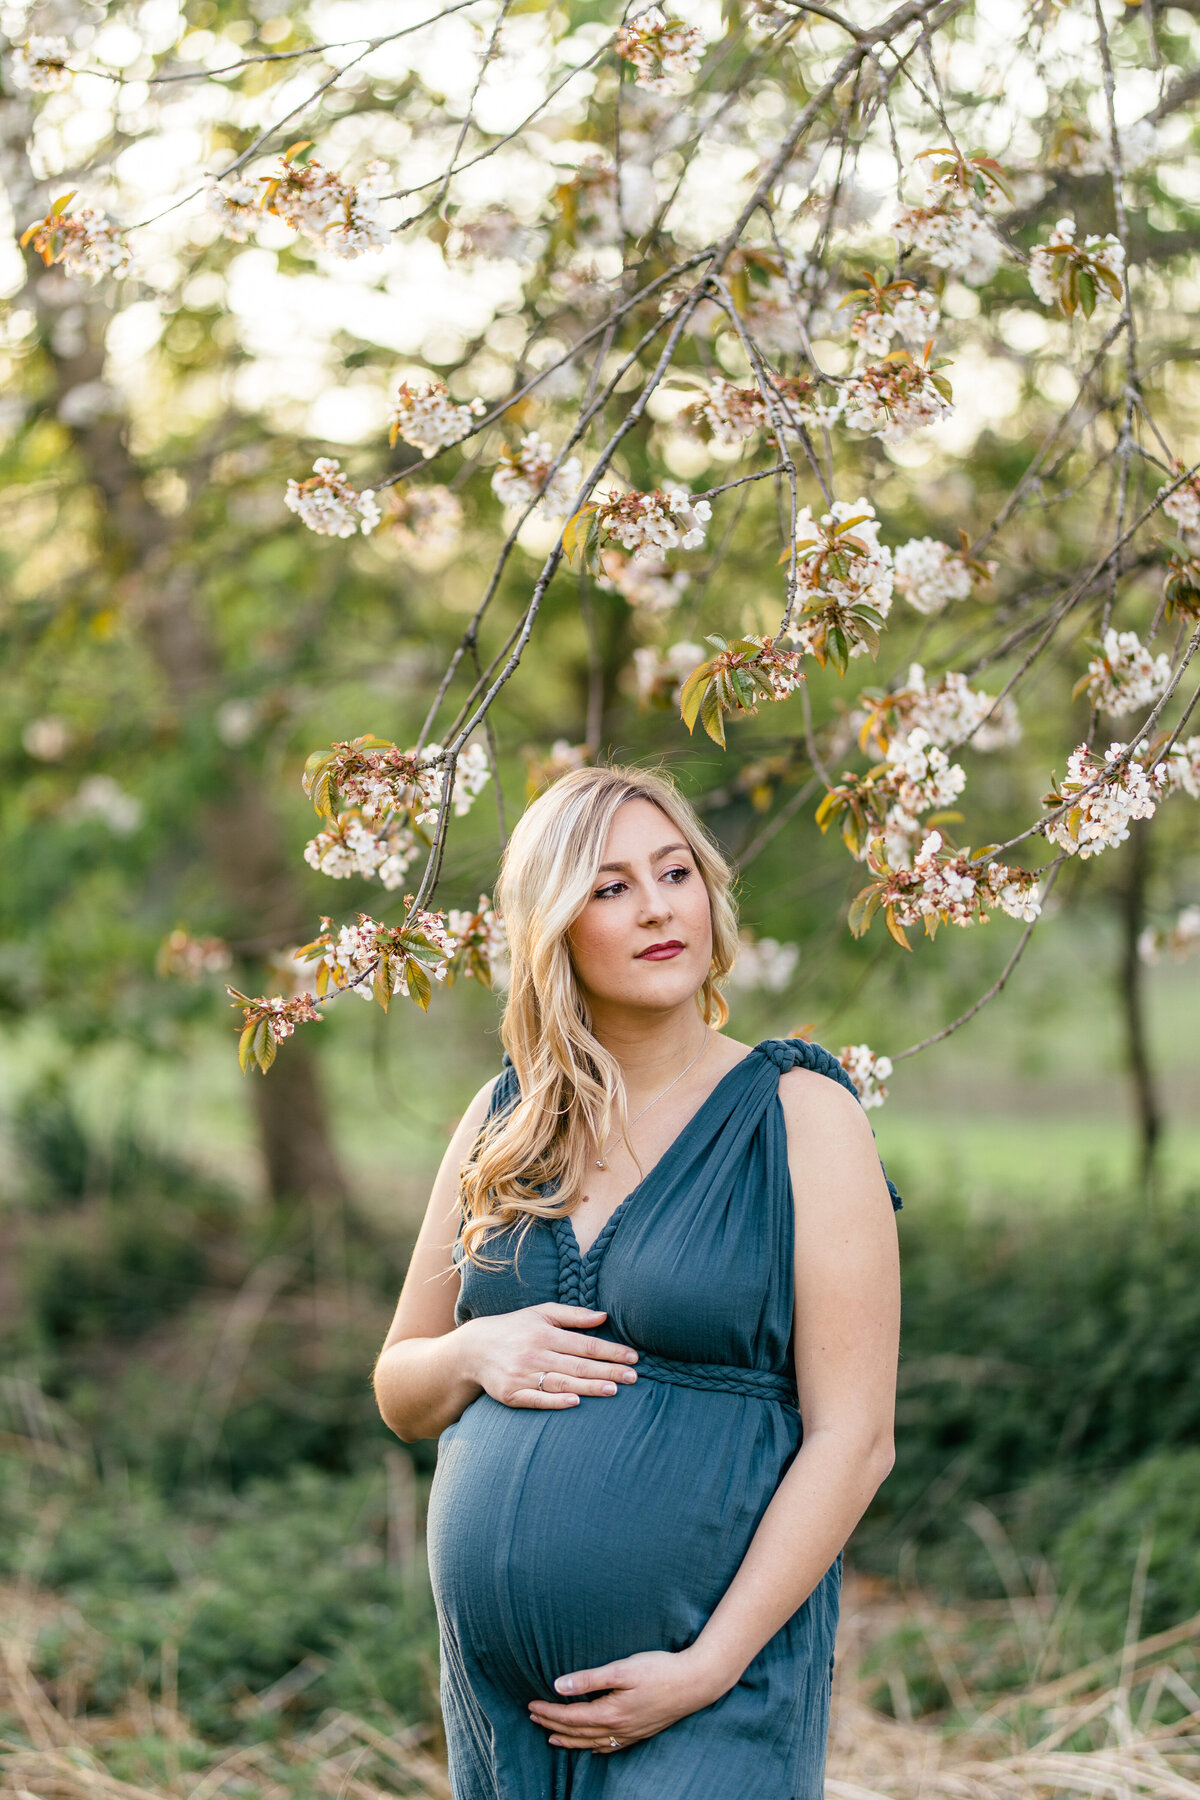 Outdoor maternity photoshoot hampshire bump shoot